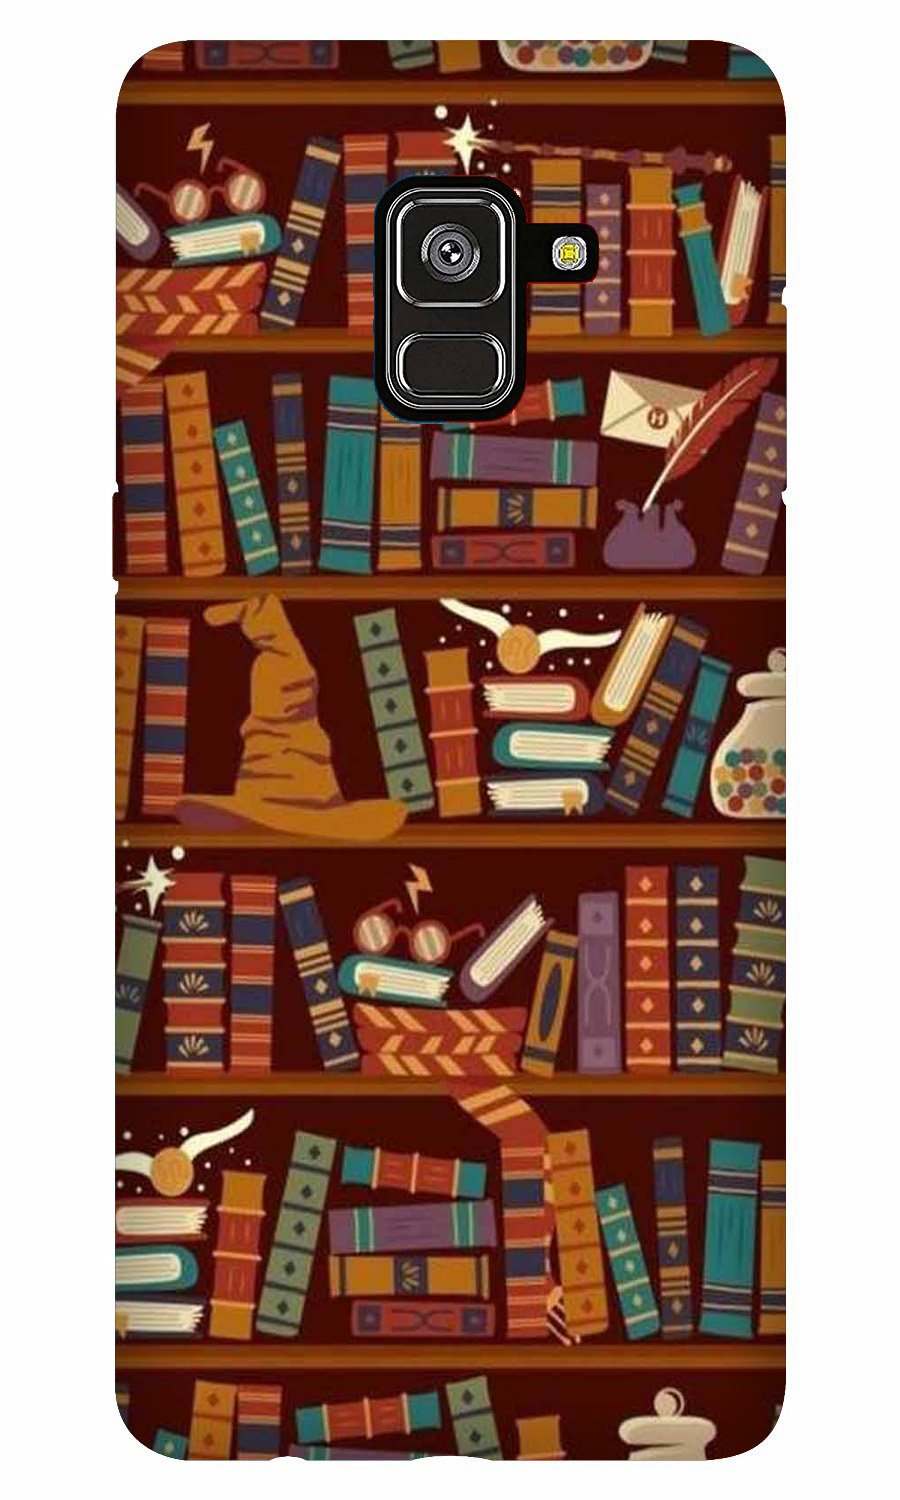 Book Shelf Mobile Back Case for Galaxy A8 Plus   (Design - 390)